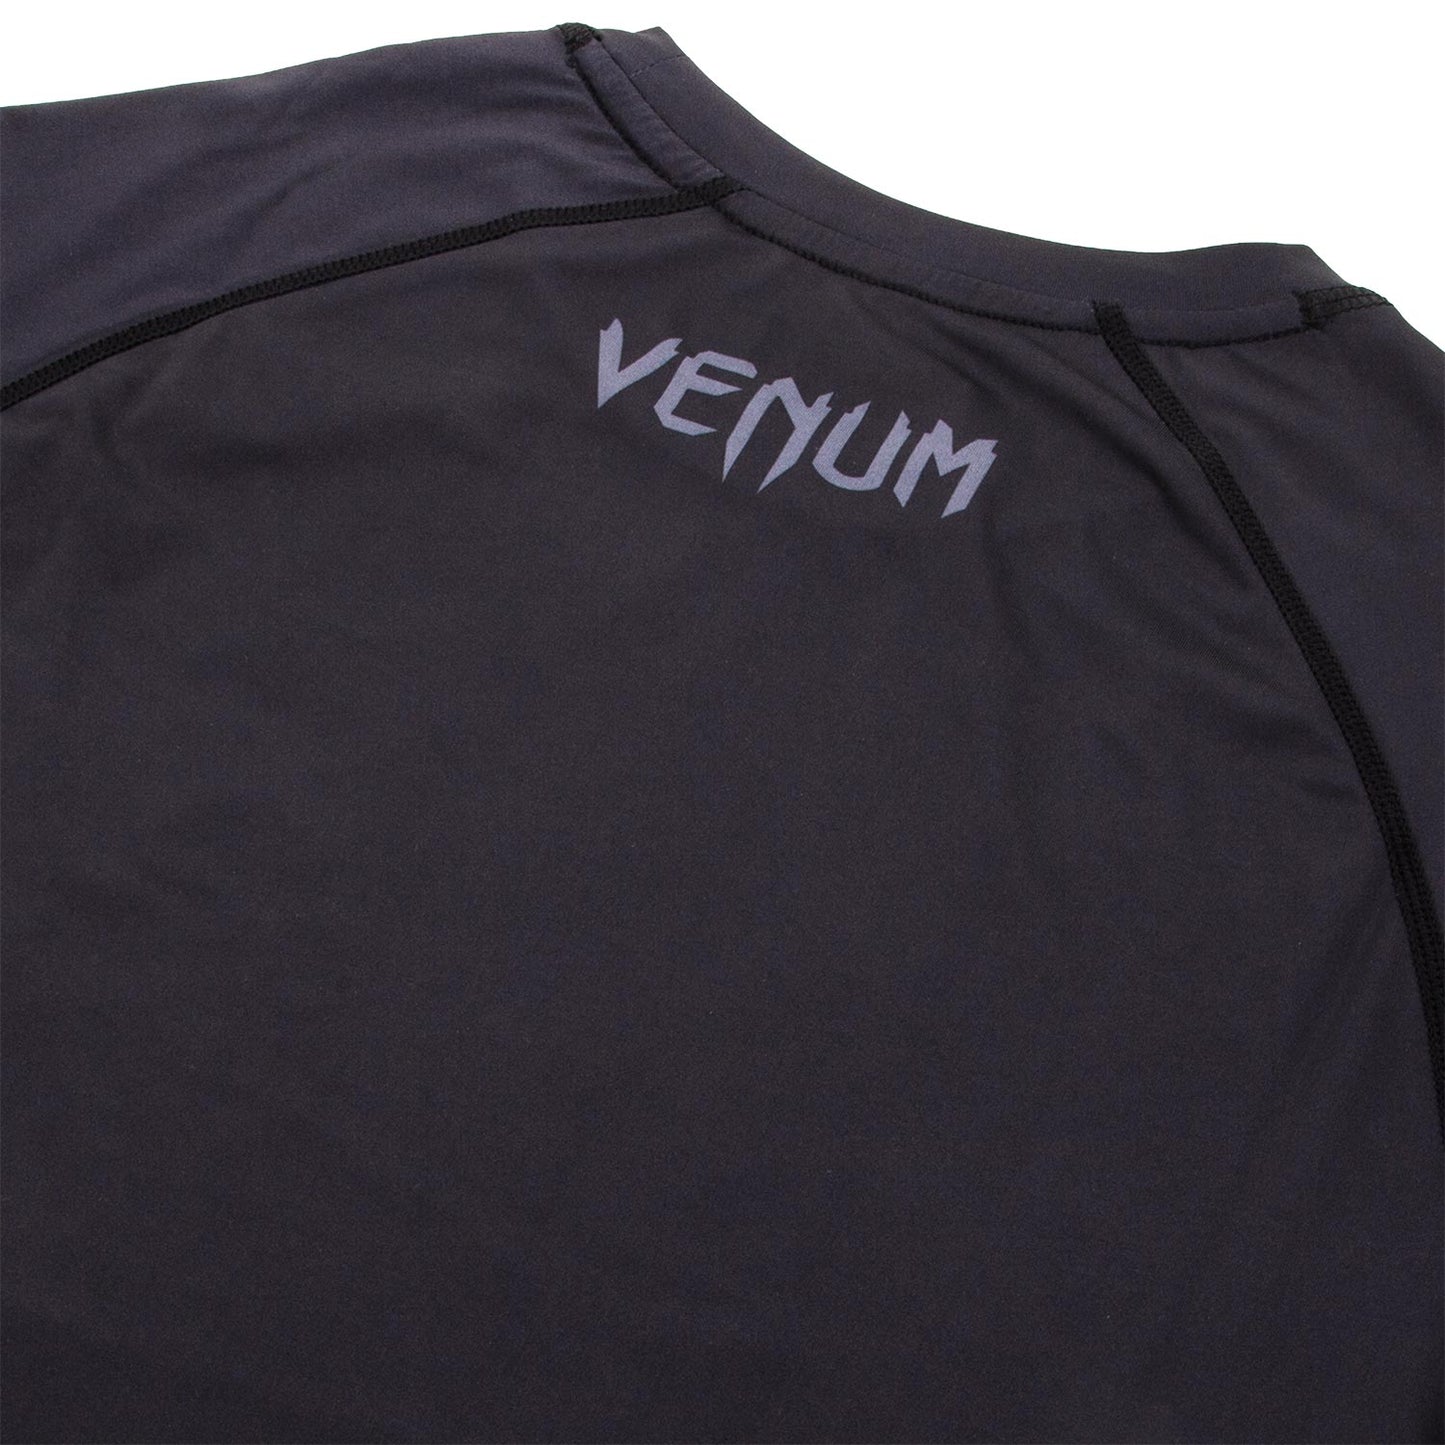 Venum Contender 3.0 Compression T-shirt - Long Sleeves - Black/Grey